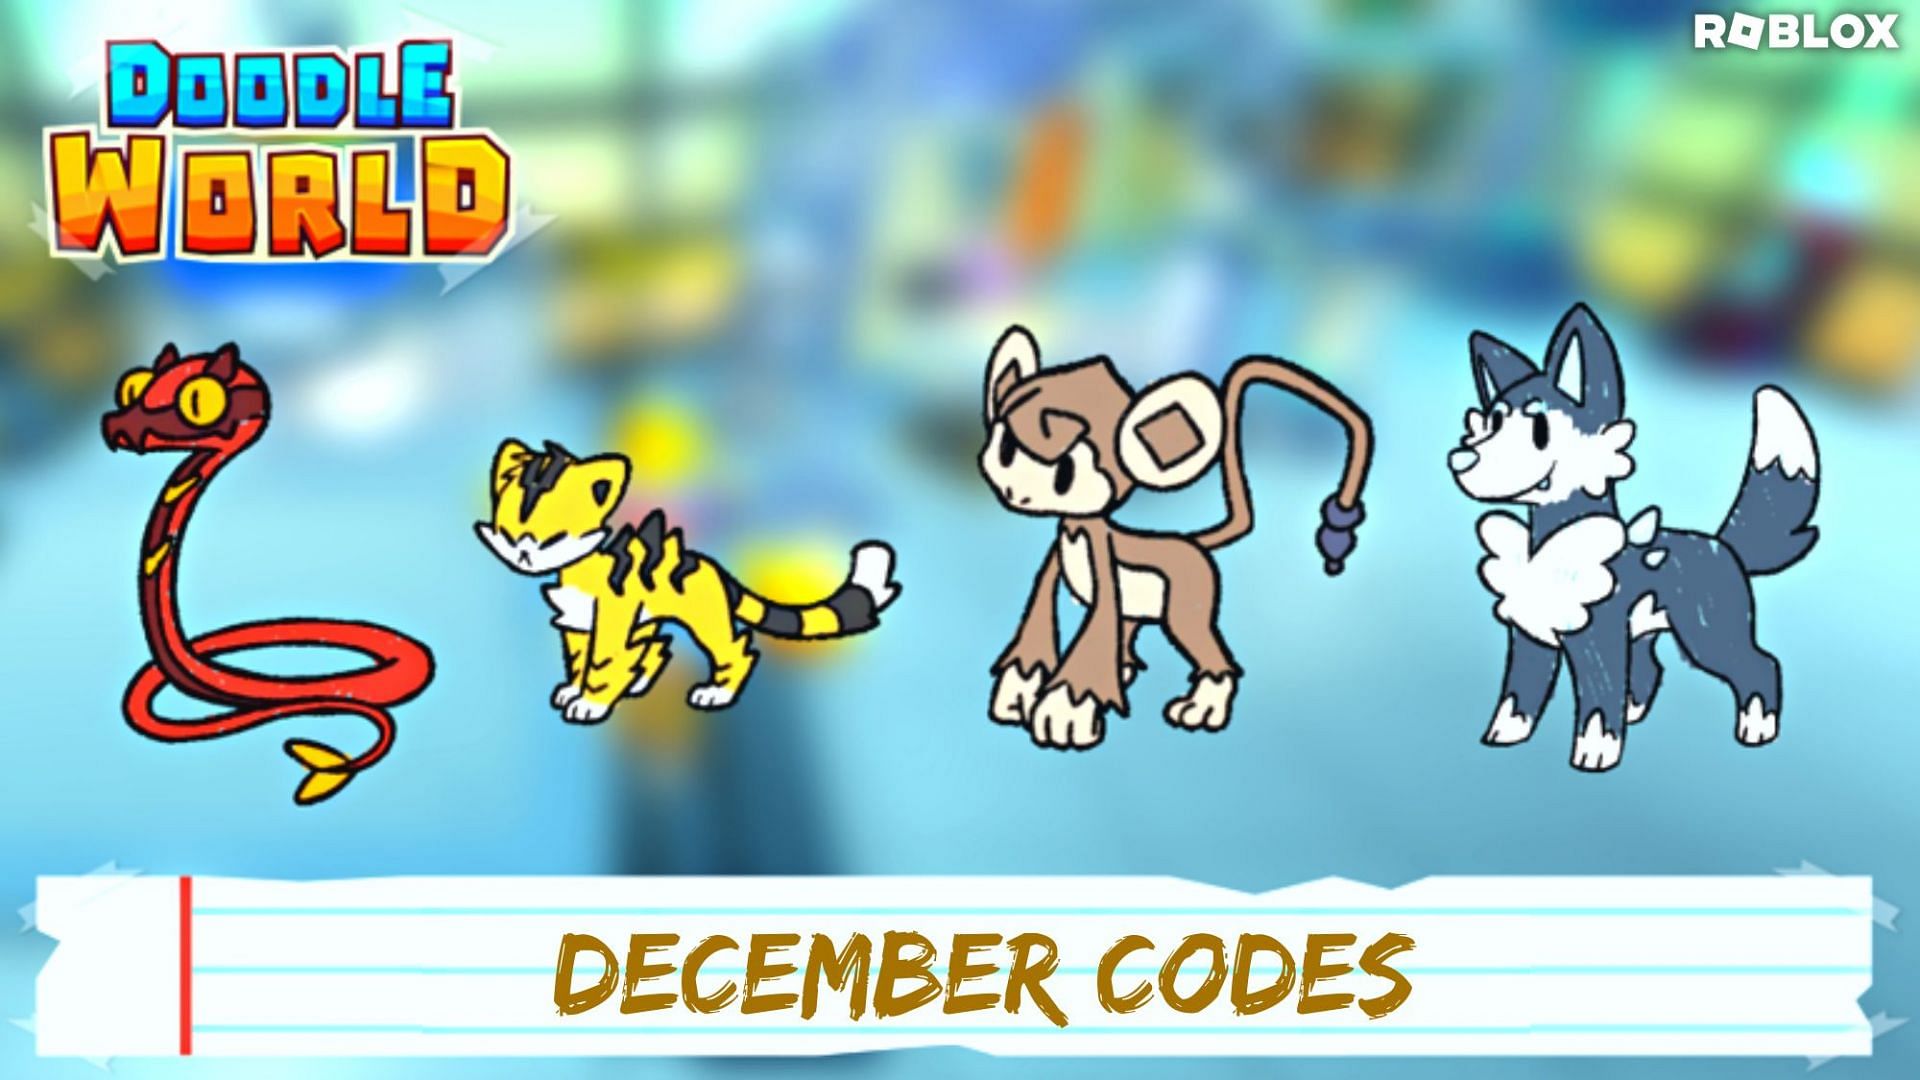 Roblox doodle world december codes